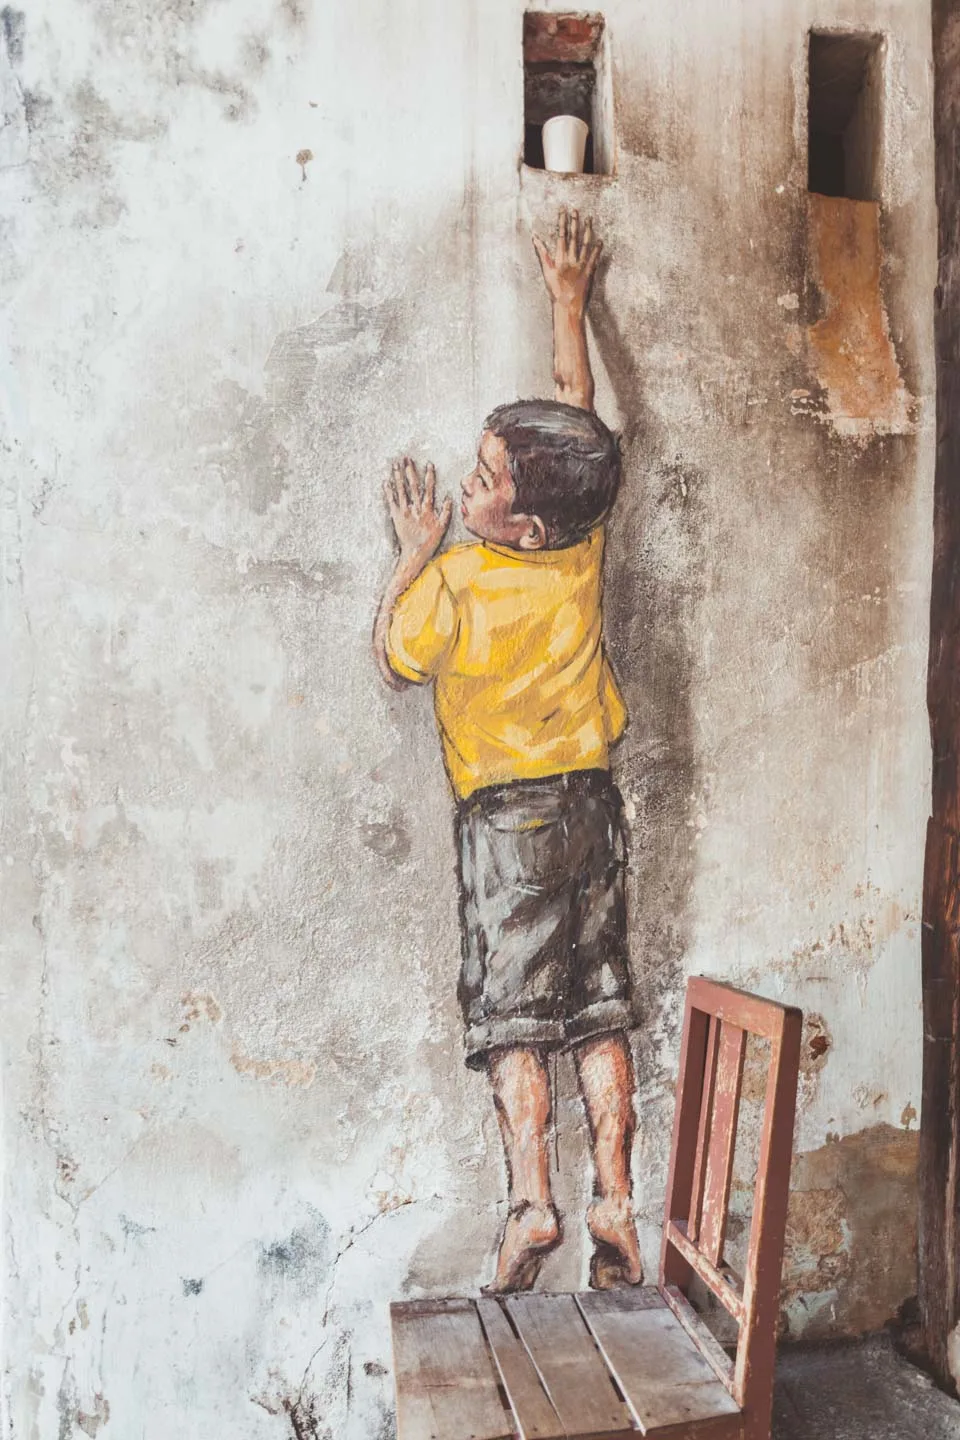 Ernest Zacharevic, Boy on Chair, Reaching Up, Penang Street Art, Malaysia